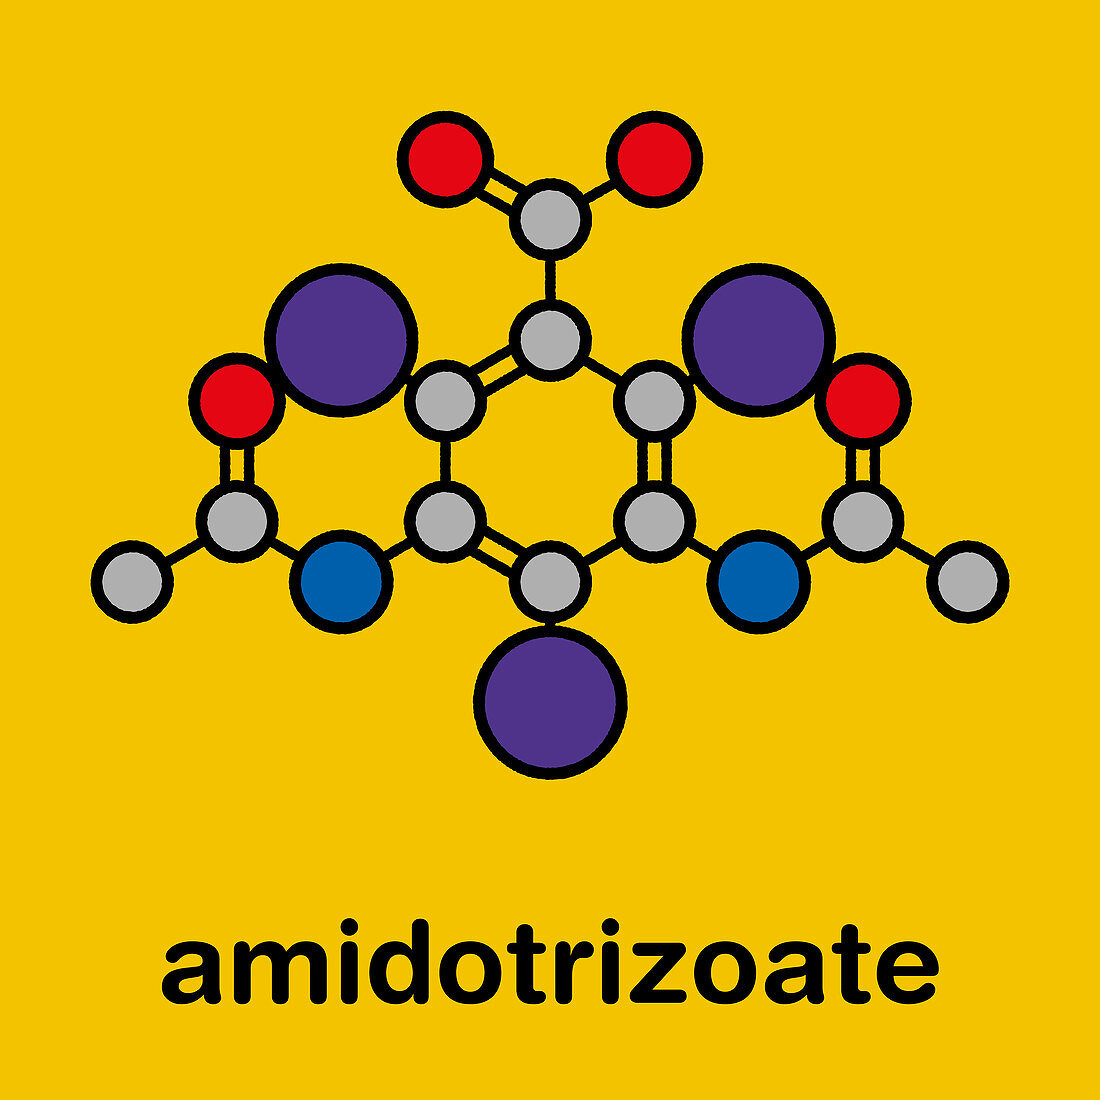 Diatrizoic acid contrast agent molecule, illustration